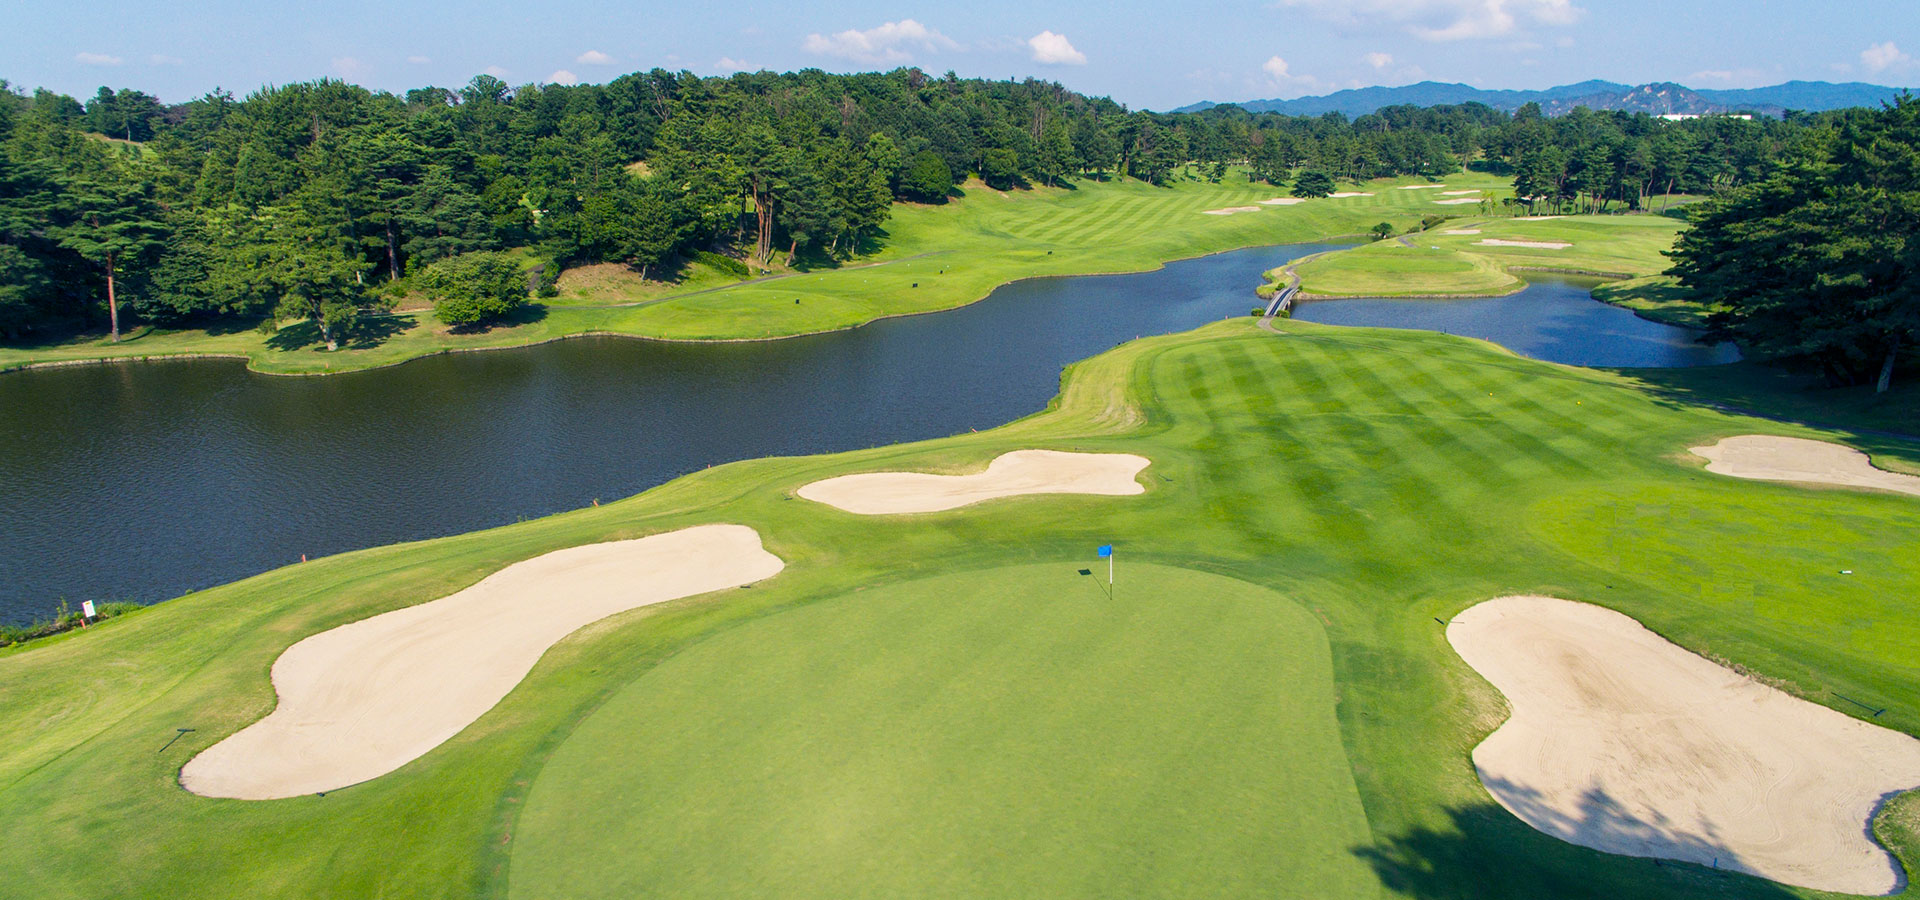 Seta Golf Course (54 holes)